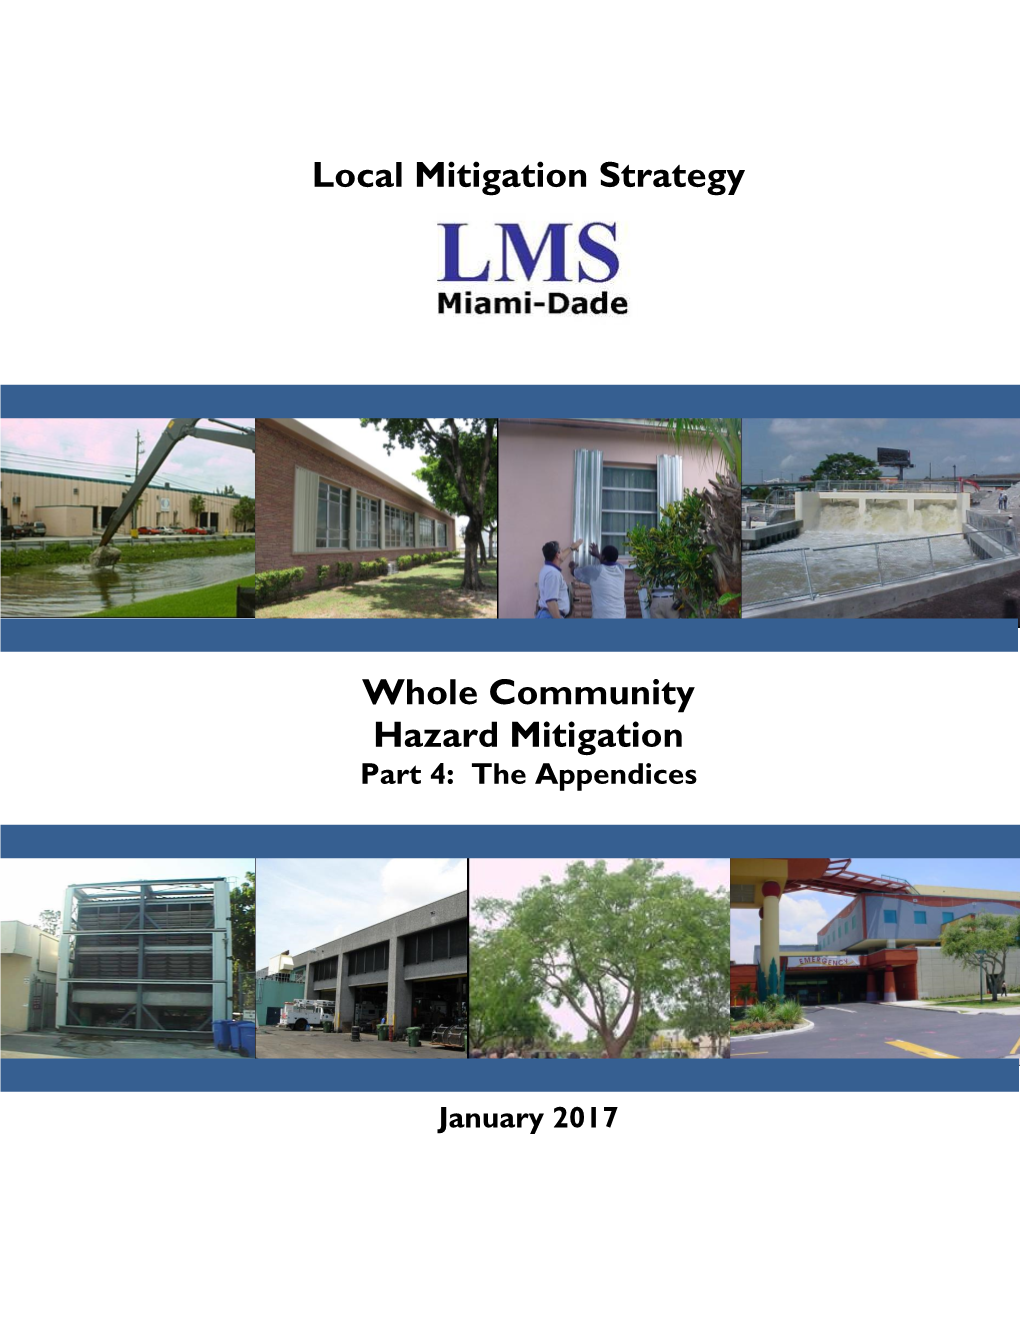 Local Mitigation Strategy Whole Community Hazard Mitigation